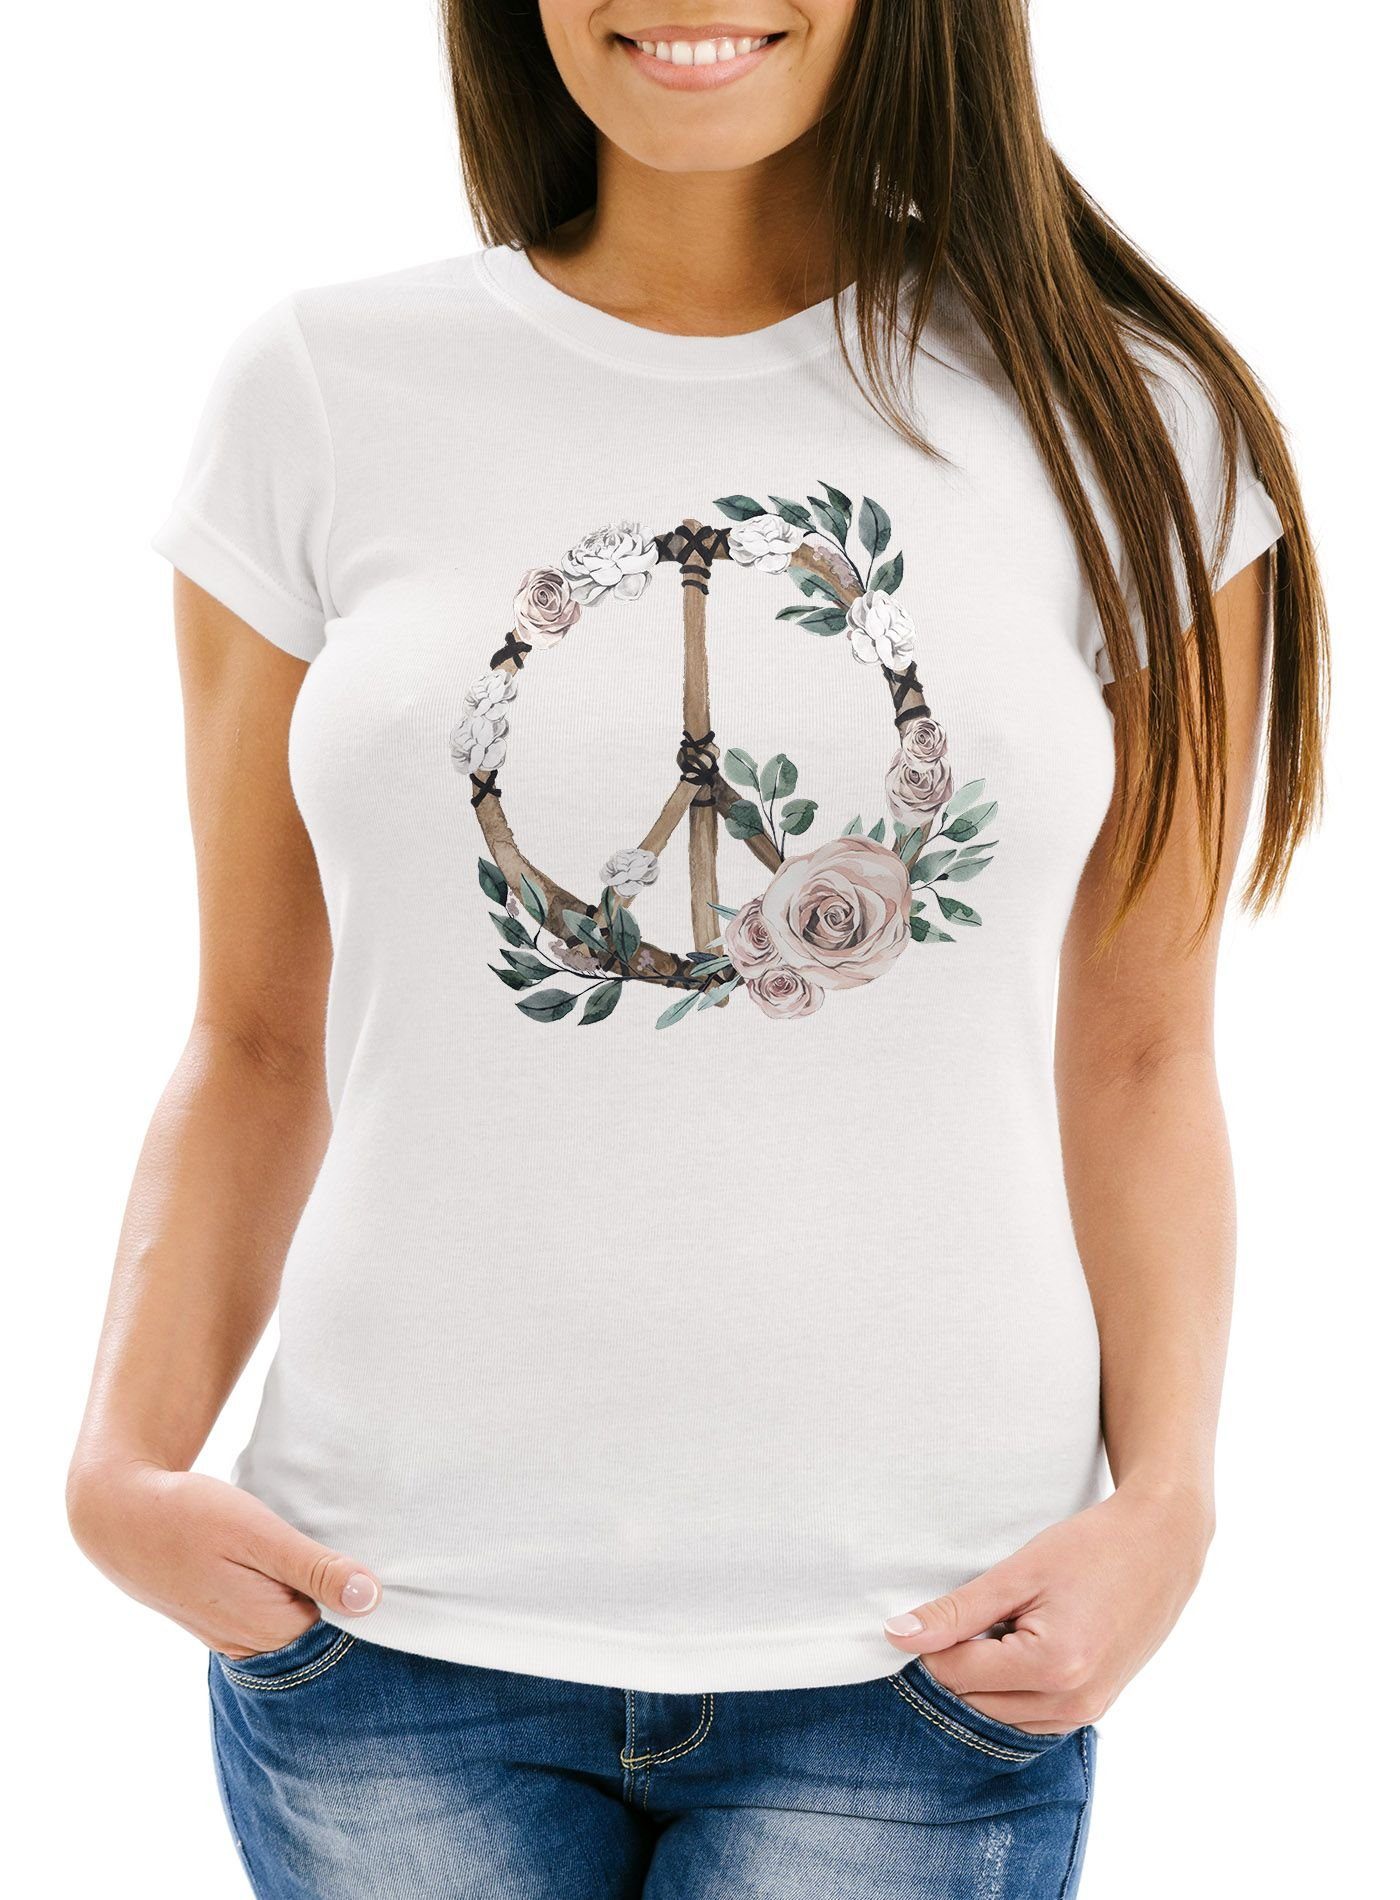 Neverless Print-Shirt »Damen T-Shirt Peace-Symbol Blumen Flowerpower Hippie  Boho Bohemian Slim Fit Neverless®« mit Print online kaufen | OTTO